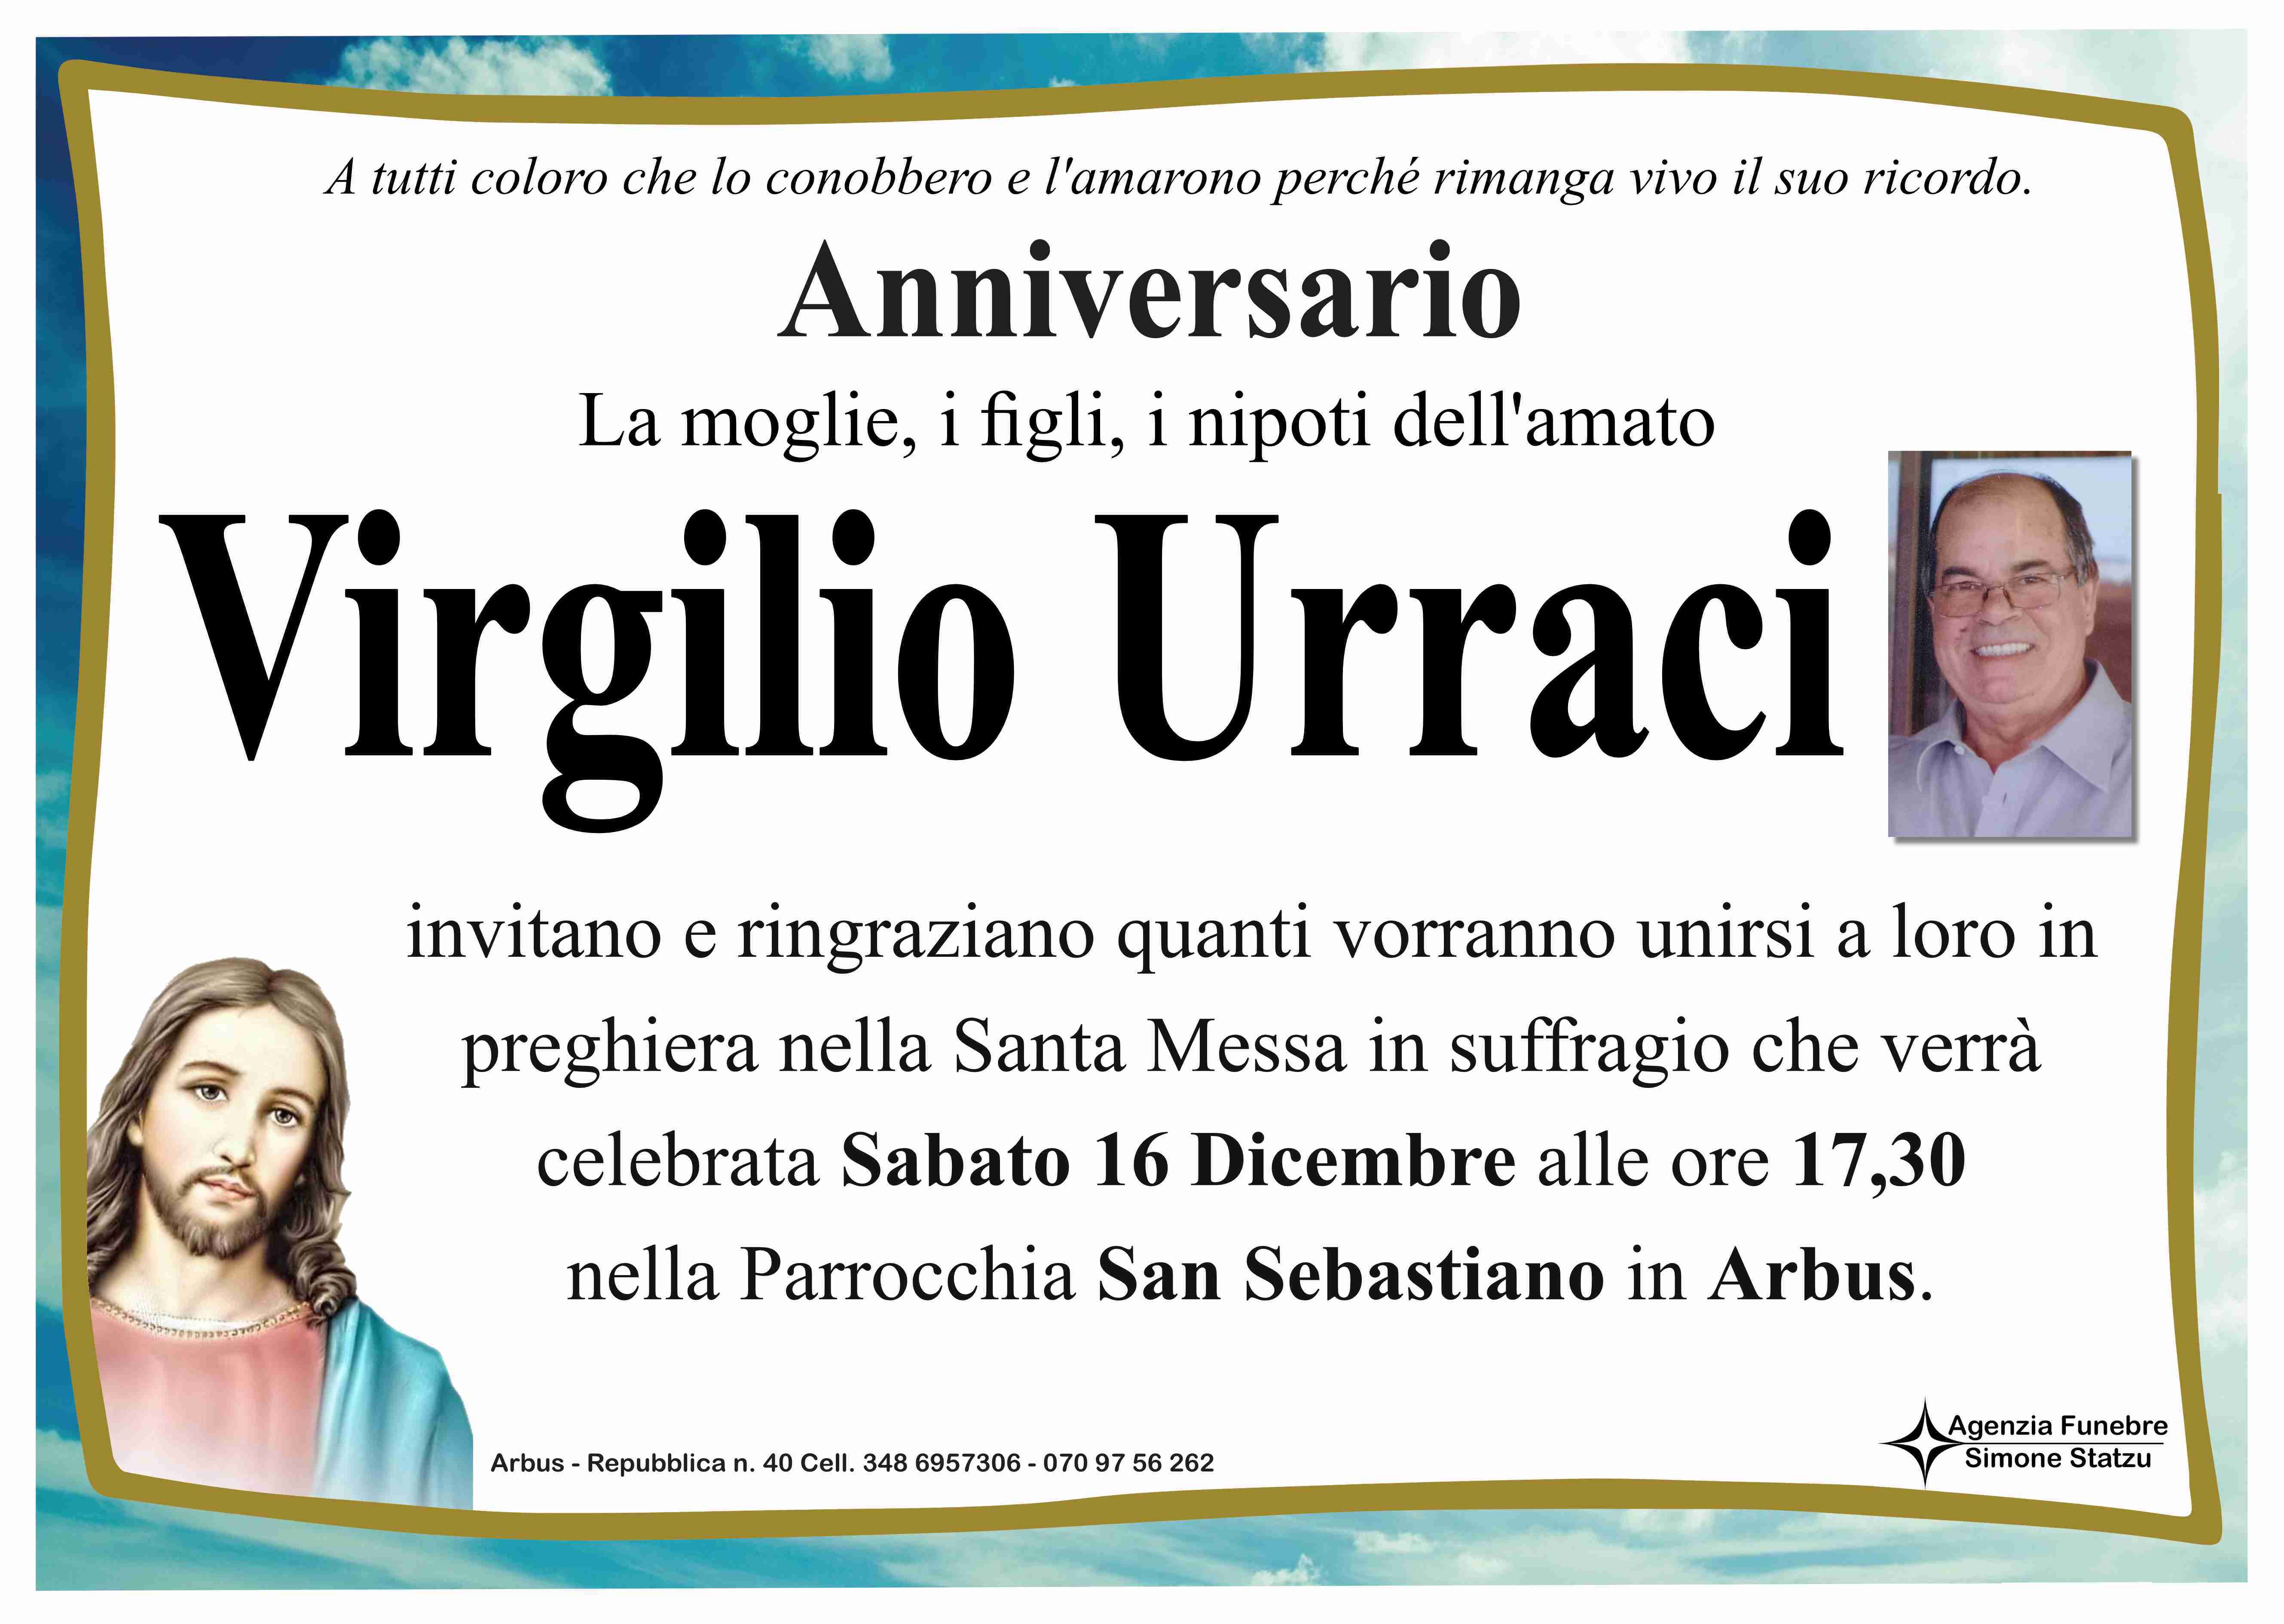 Virgilio Urraci